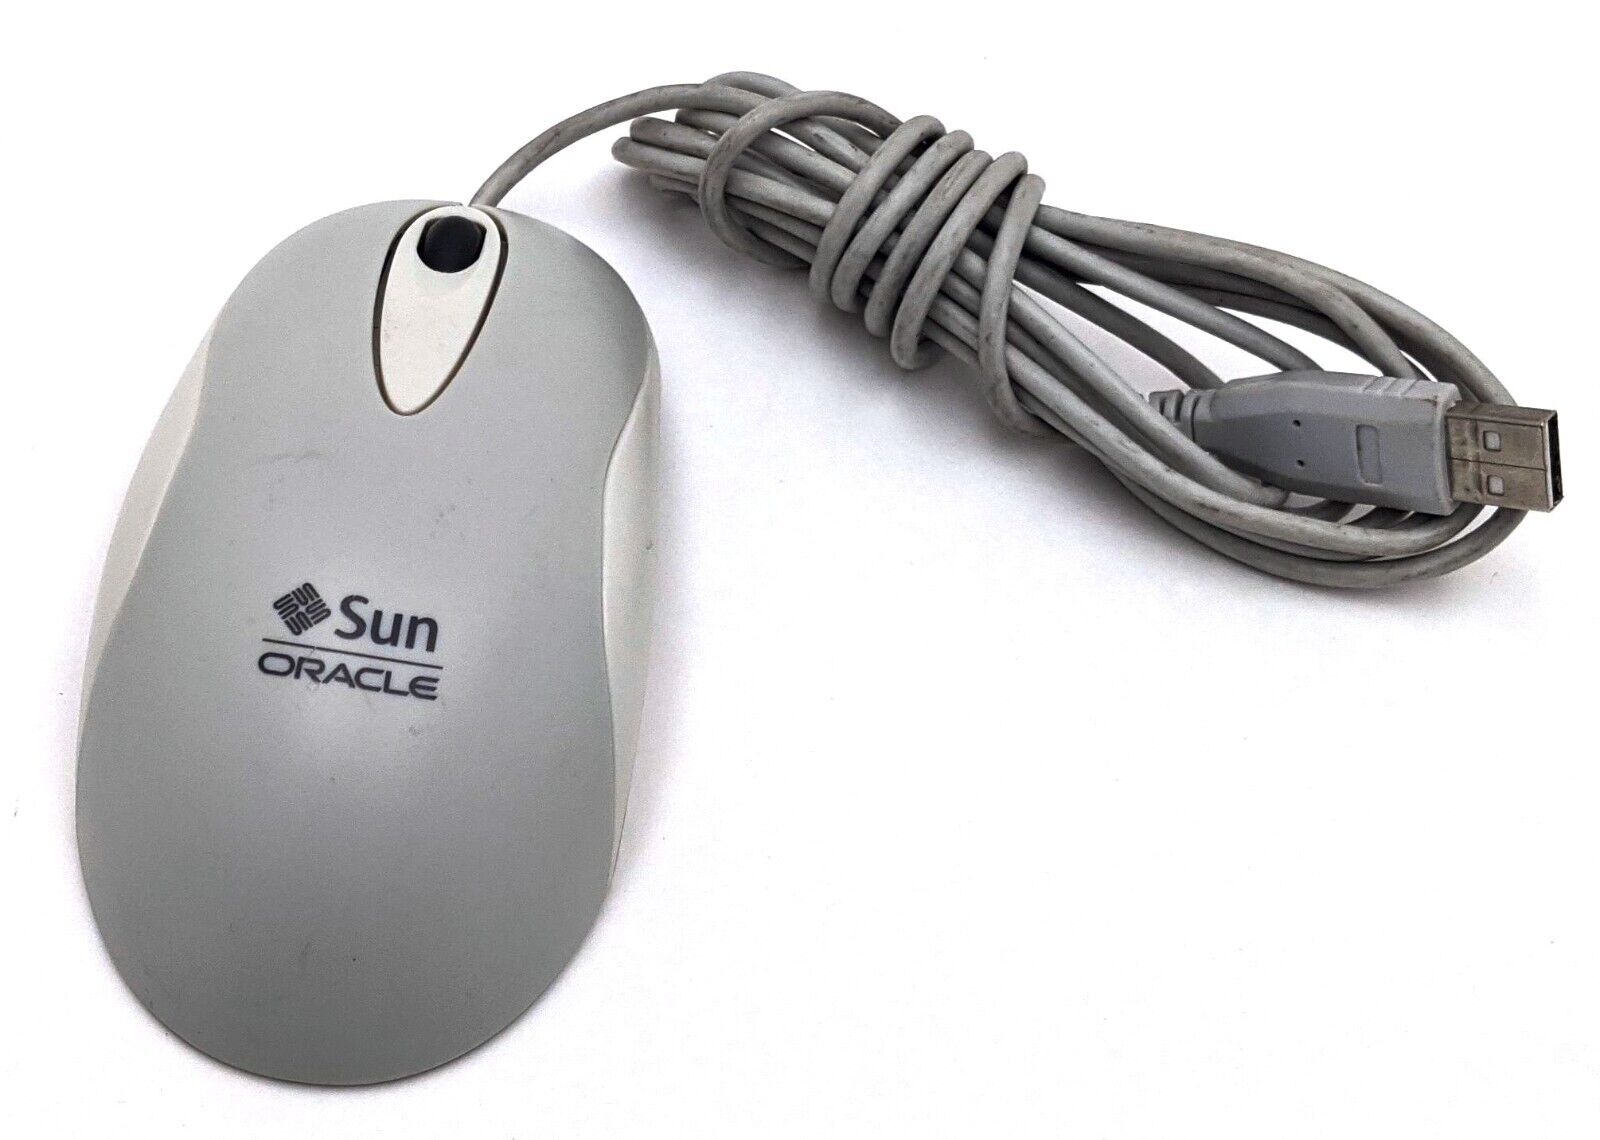 Sun Oracle FID-638 USB Optical Computer Mouse 2-Button Scroll Wheel 371-0788-02